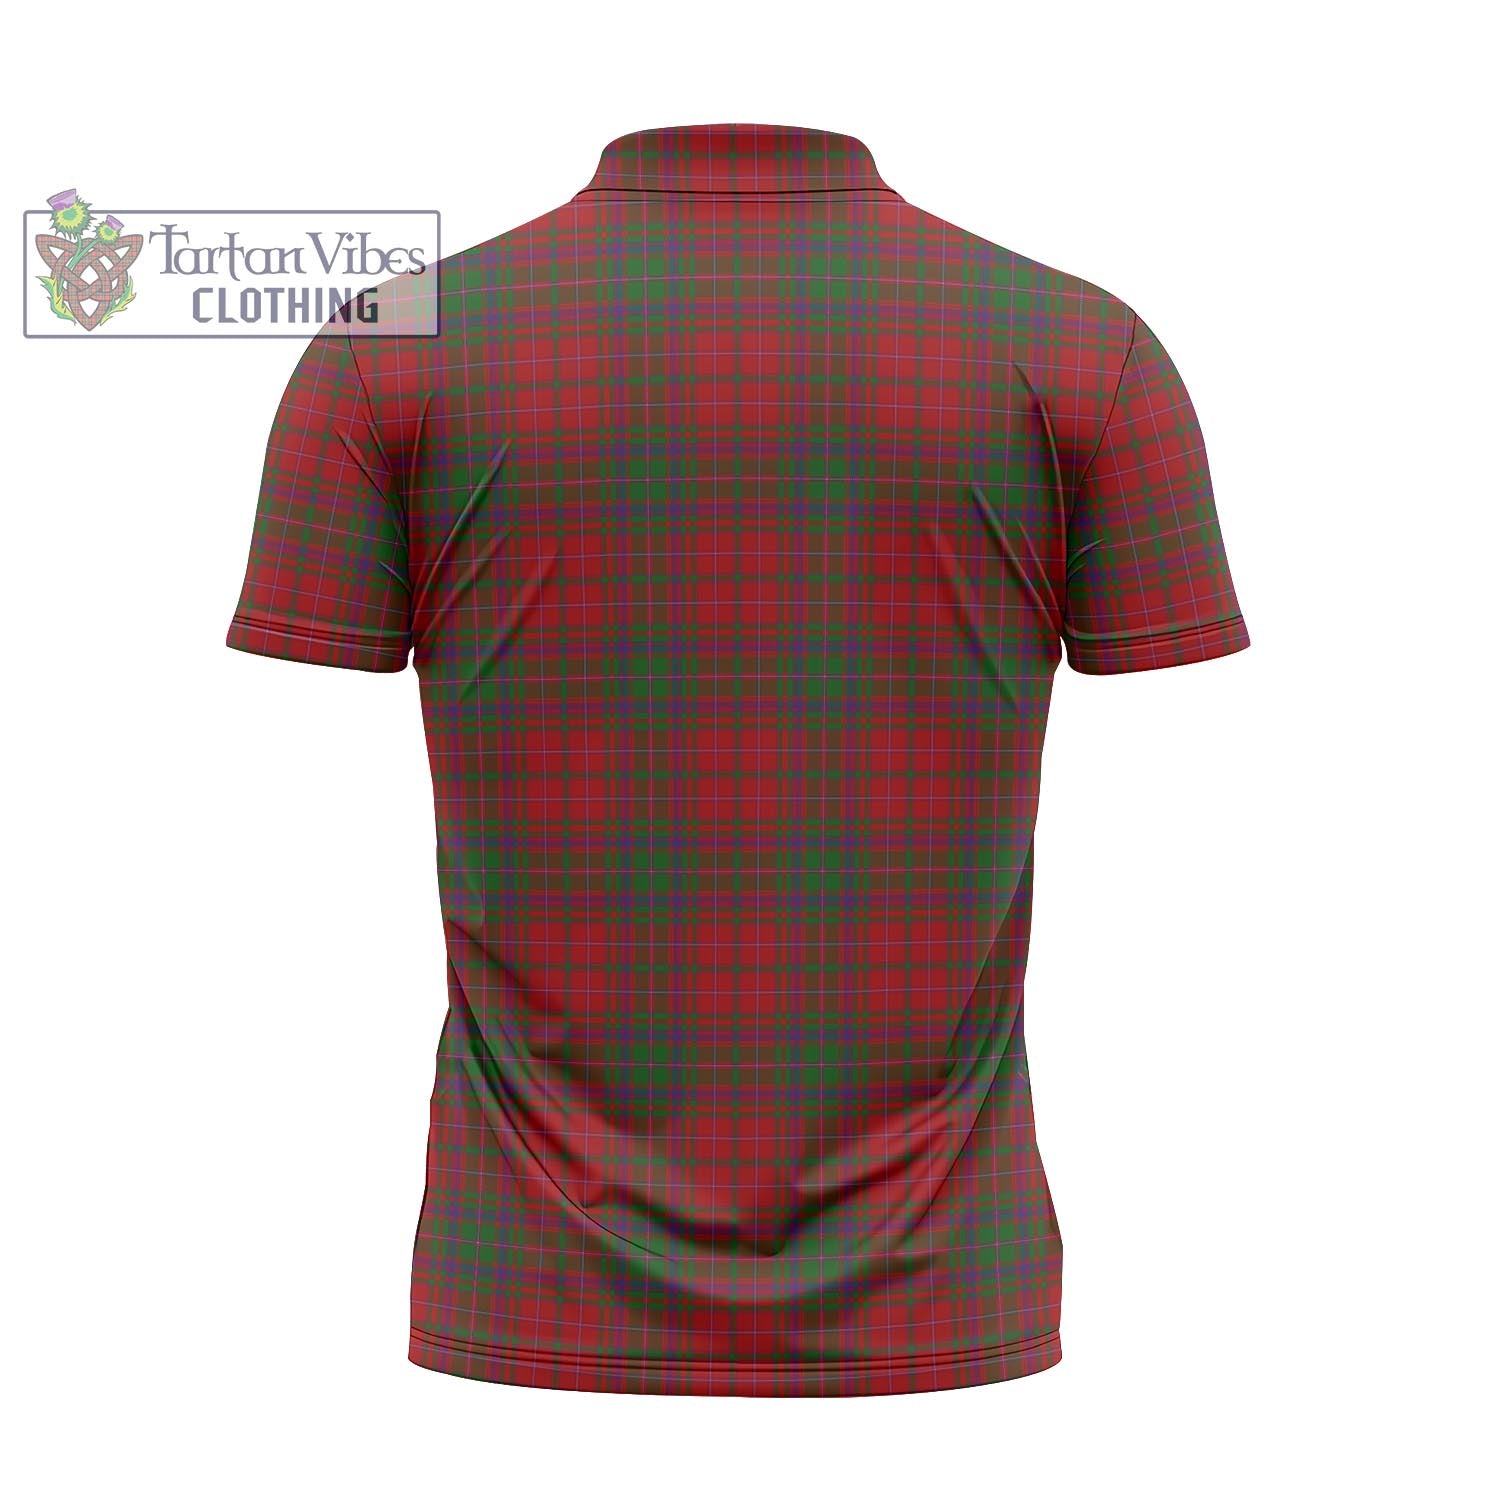 Tartan Vibes Clothing MacDougall Tartan Zipper Polo Shirt with Family Crest